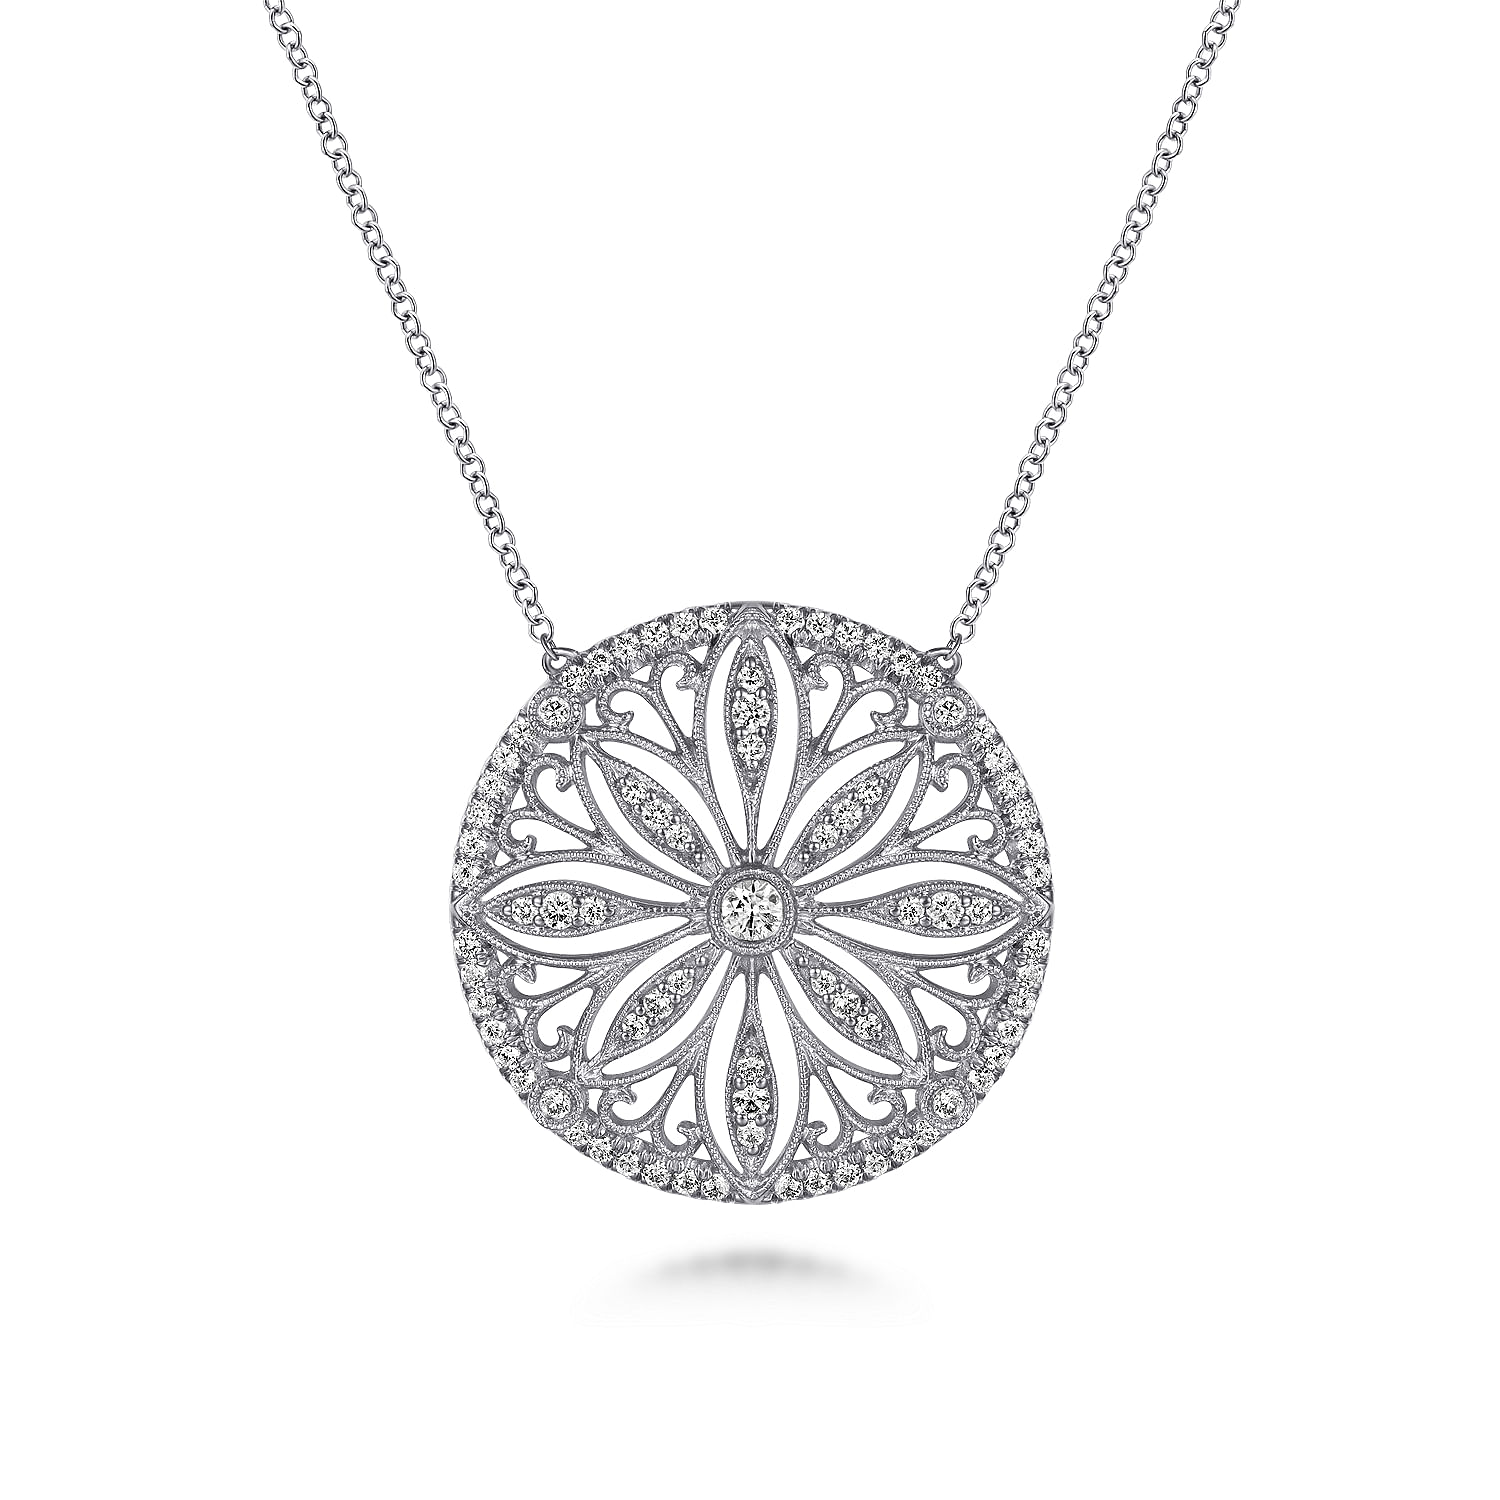 Vintage Inspired 14K White Gold Floral Diamond Pendant Necklace